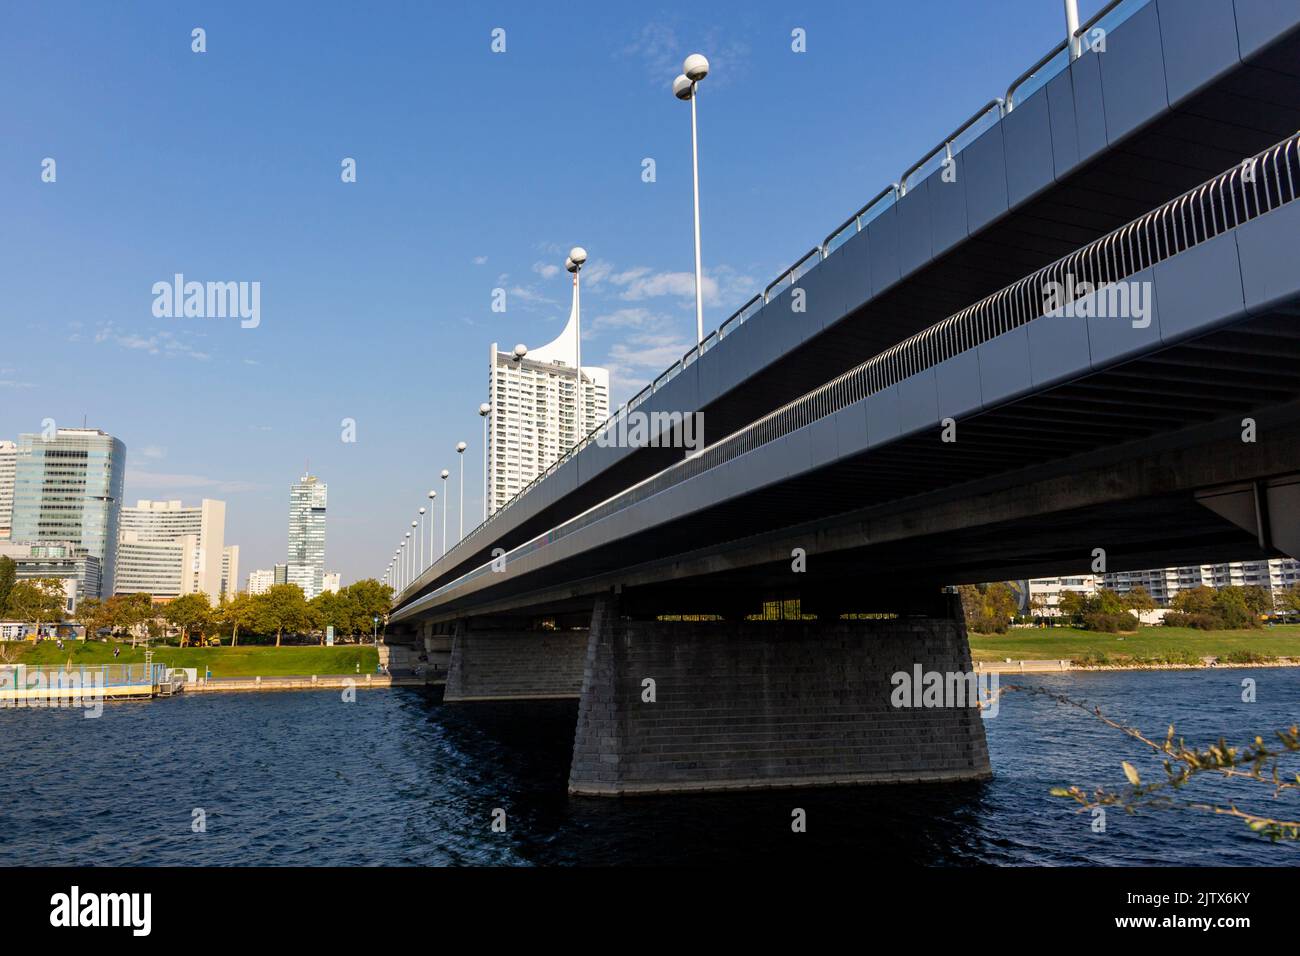 VIENNA, AUSTRIA: Reichsbrücke (Imperial Bridge) over the Danube river in Vienna, Austria. Stock Photo